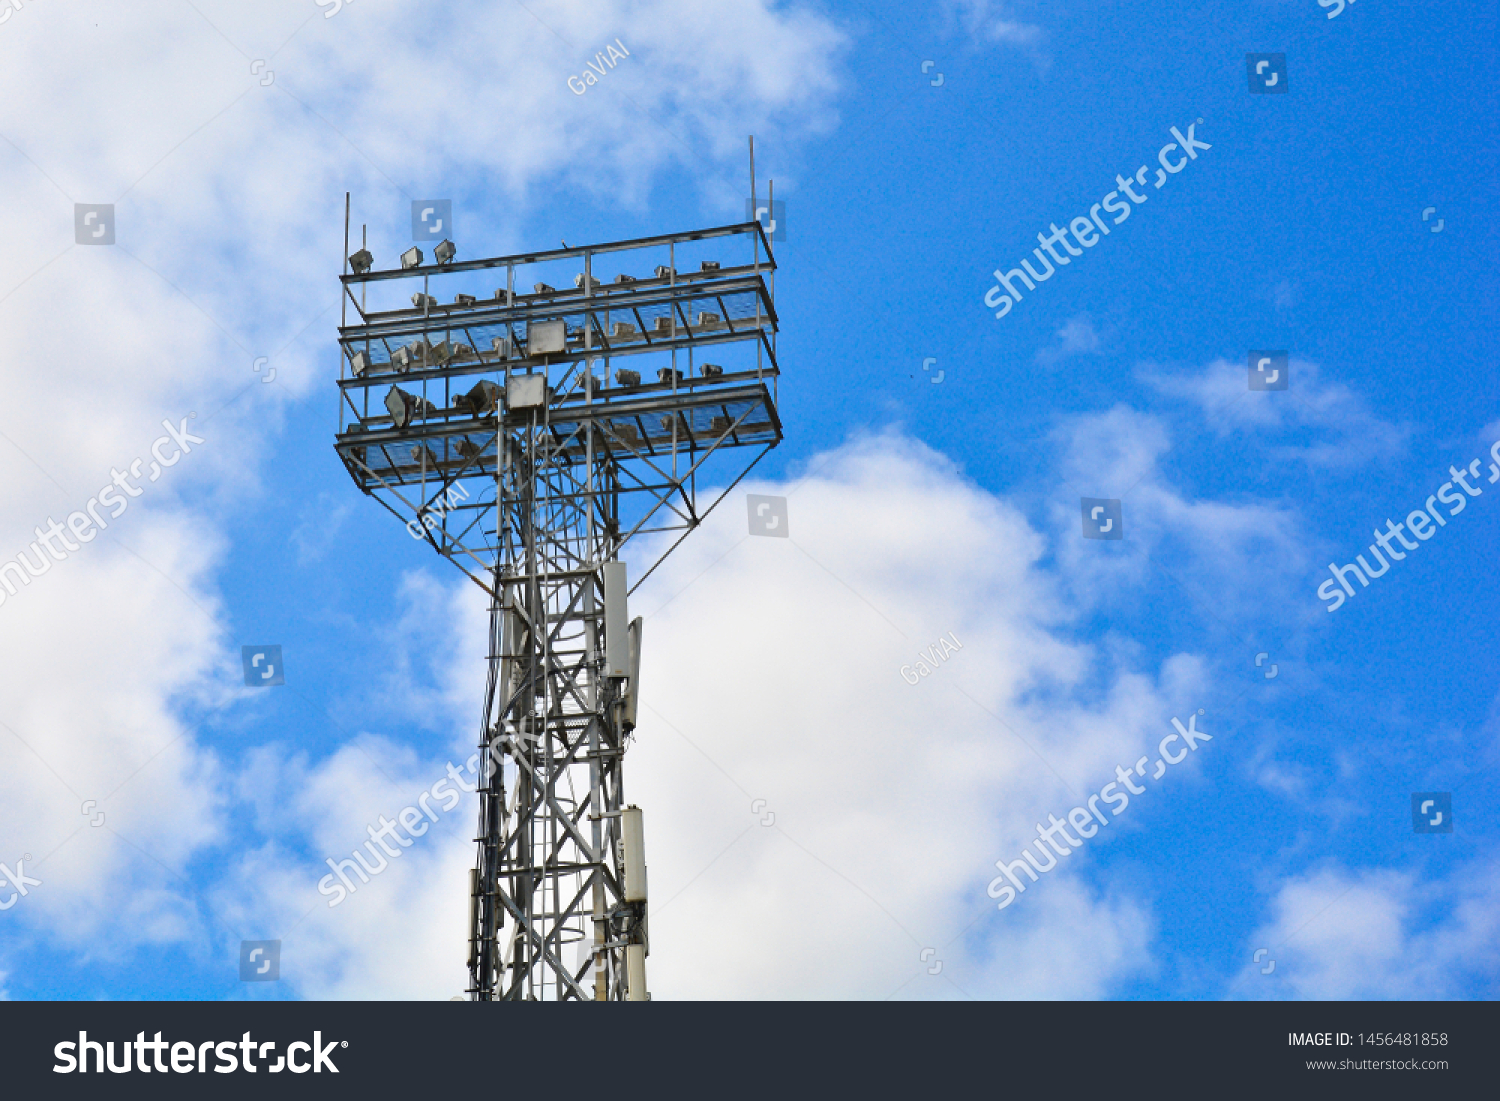 Lighting support. Stadium Post Lighting. Tall pillar with spotlights to illuminate a football stadium against the sky with clouds #1456481858